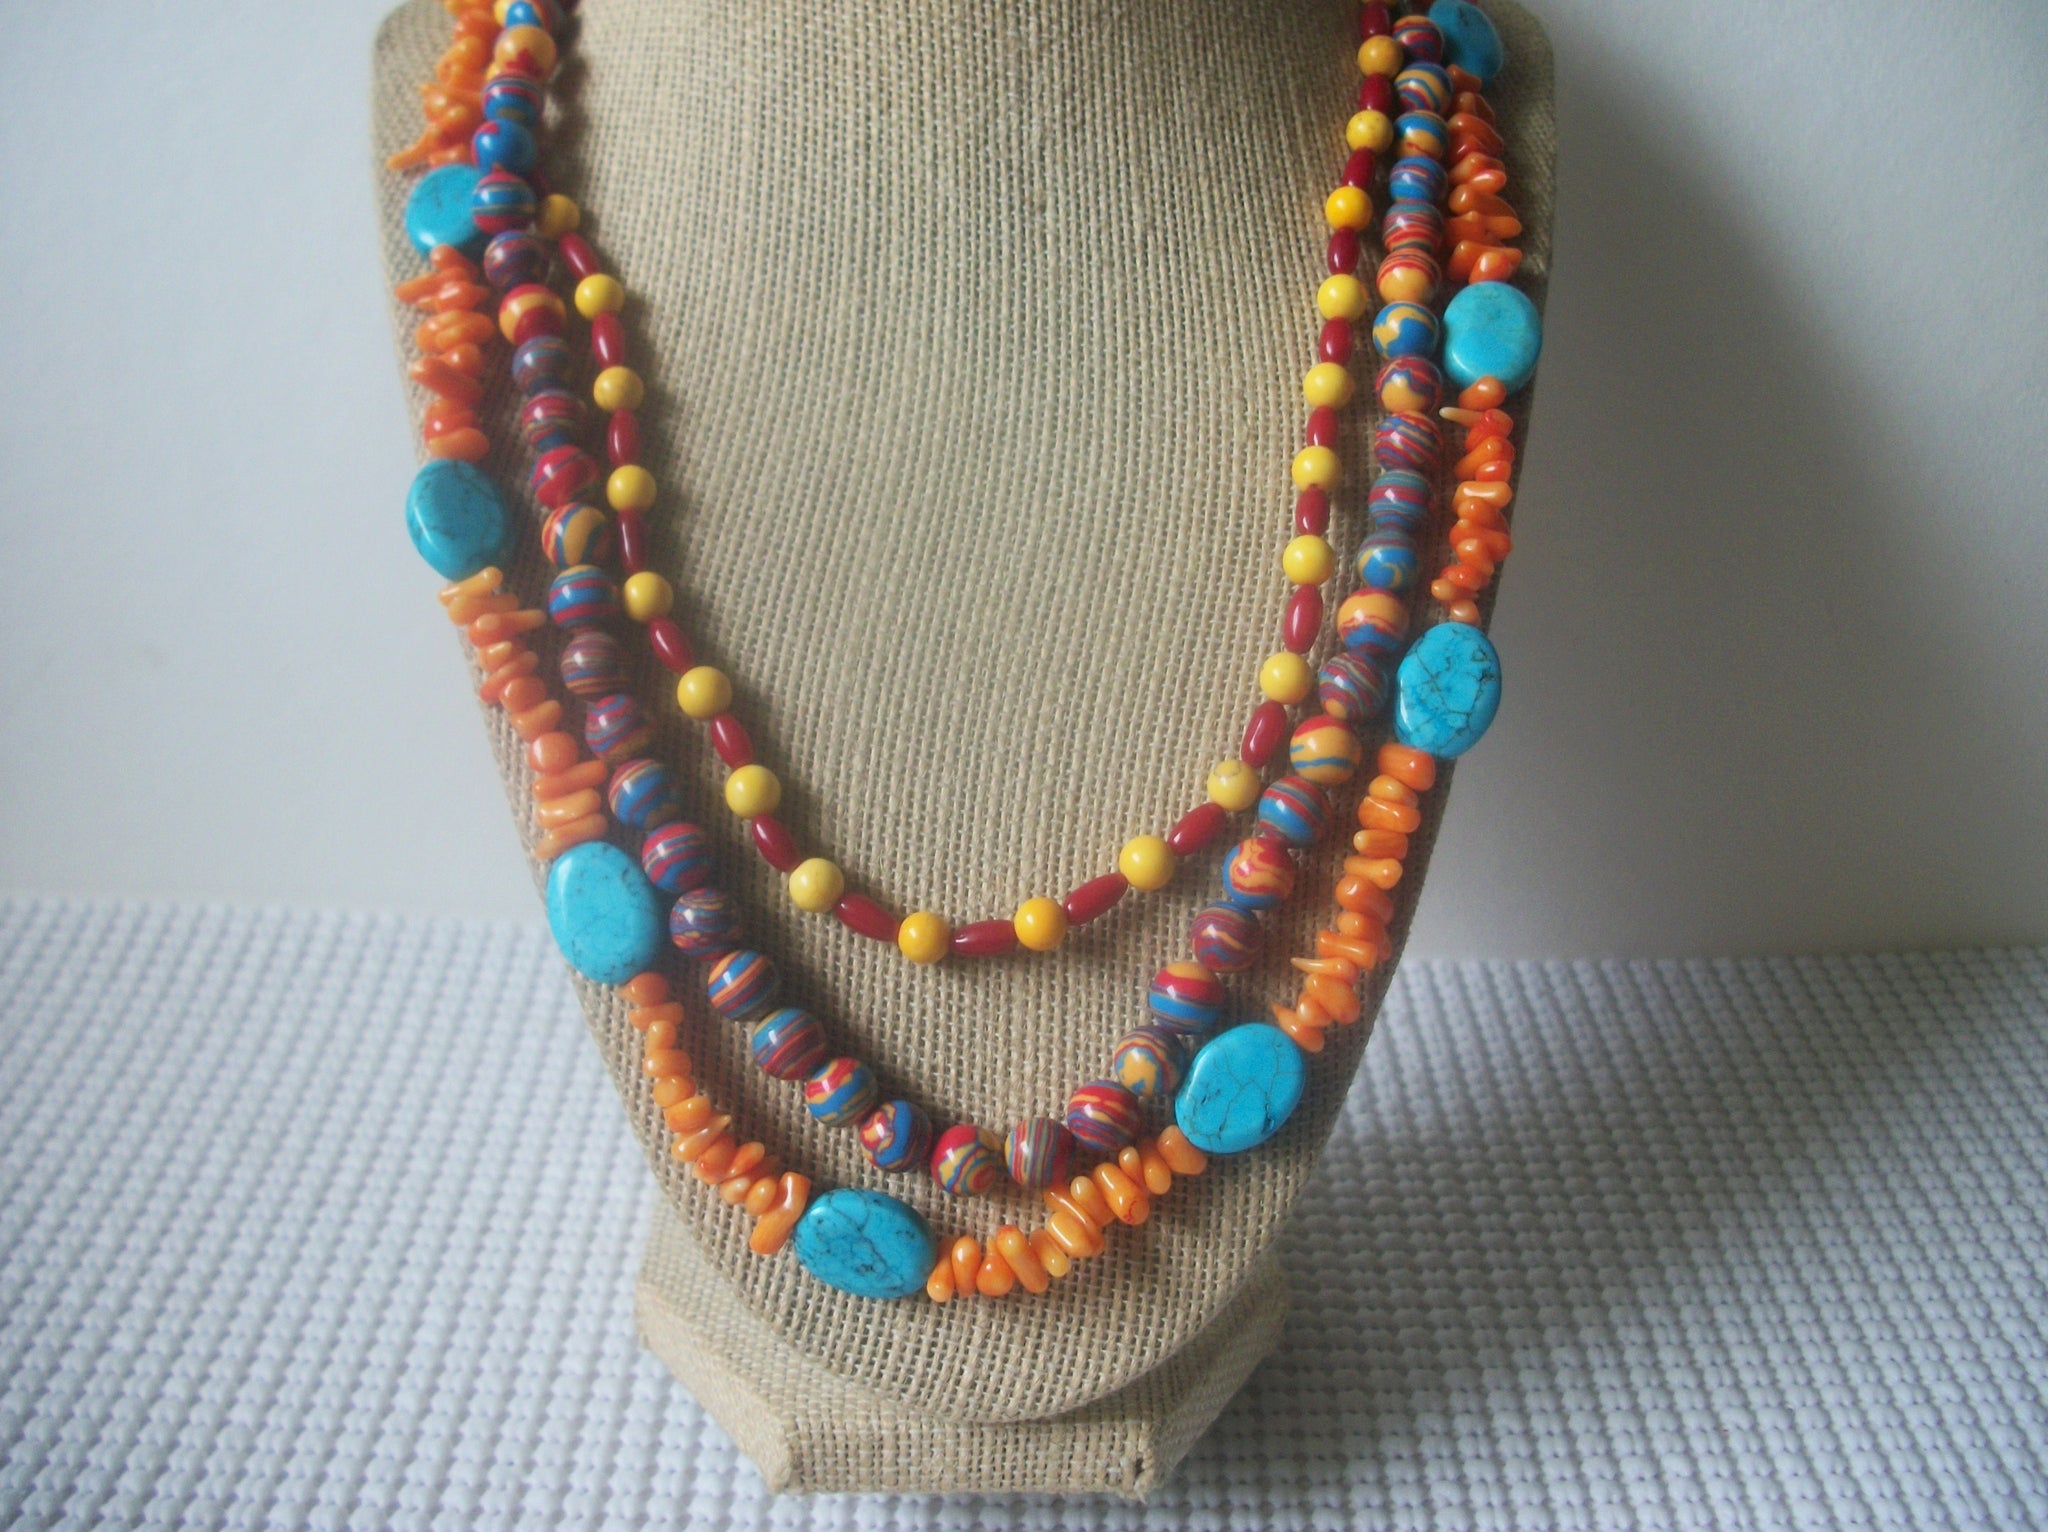 Southwestern Necklace, Colorful Stone Beads, Multi Strand Celebration 20" - 24" Long 82016 Gift